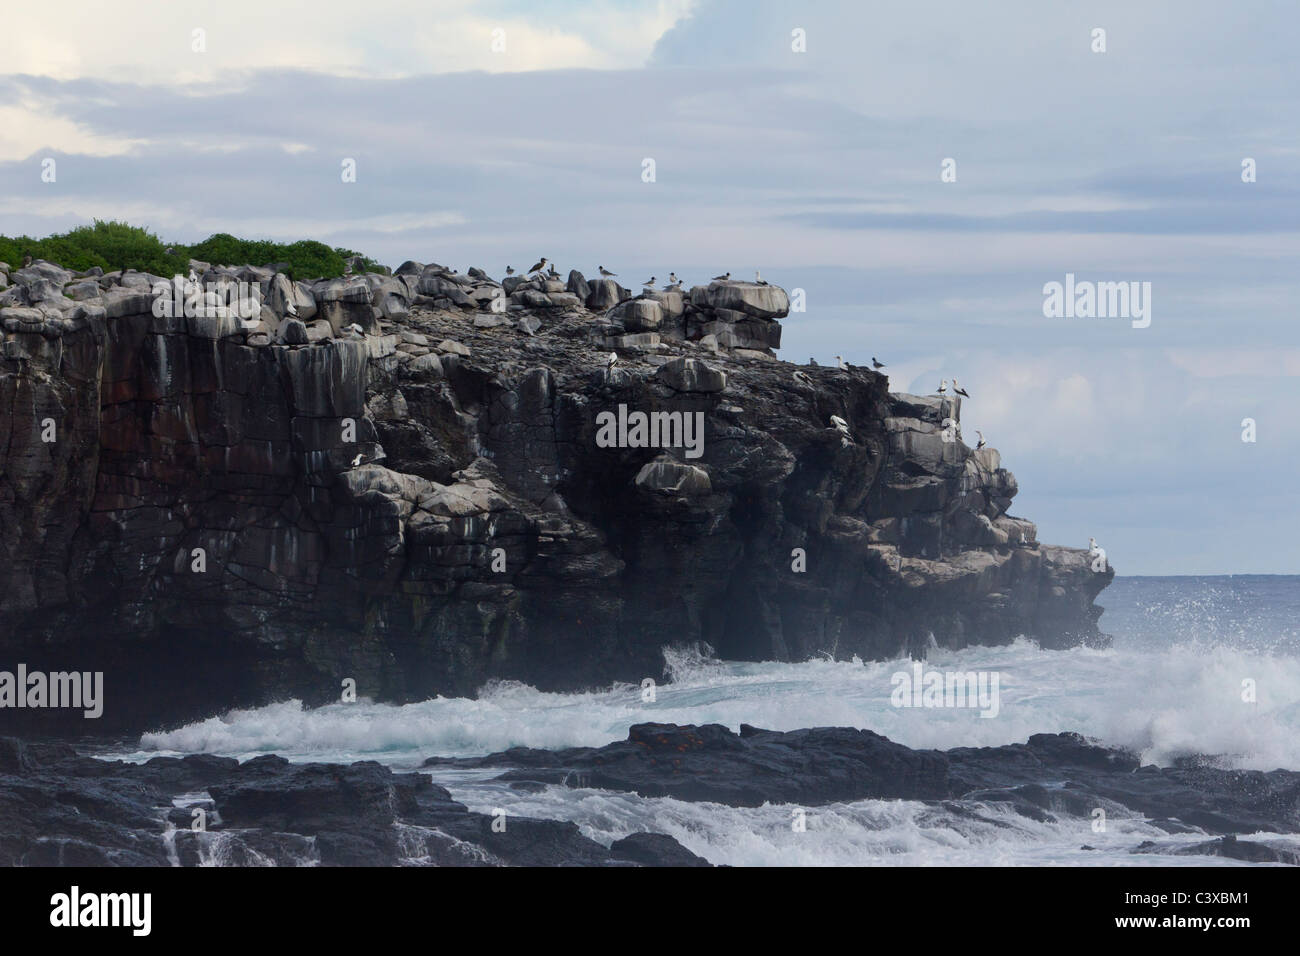 cliff with nesting seabirds, Punta Suarez, Espanola Island, Galapagos Islands, Ecuador Stock Photo